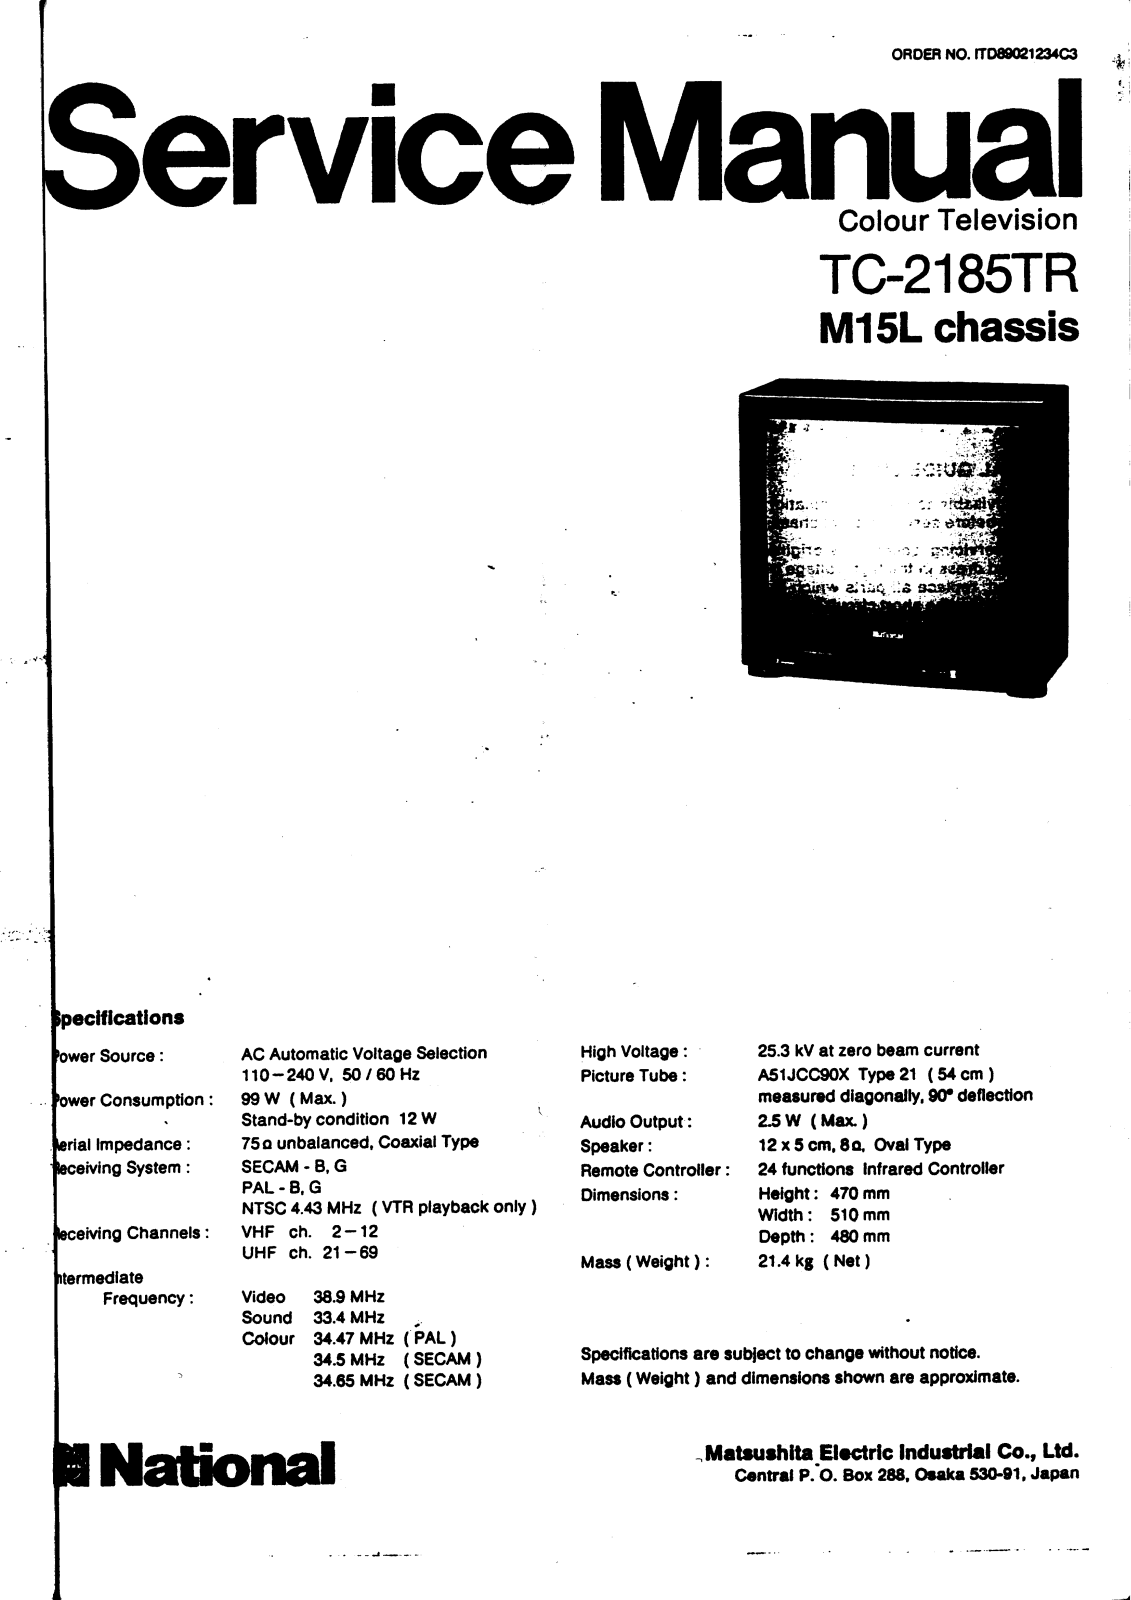 panasonic tc-2185tr Service Manual